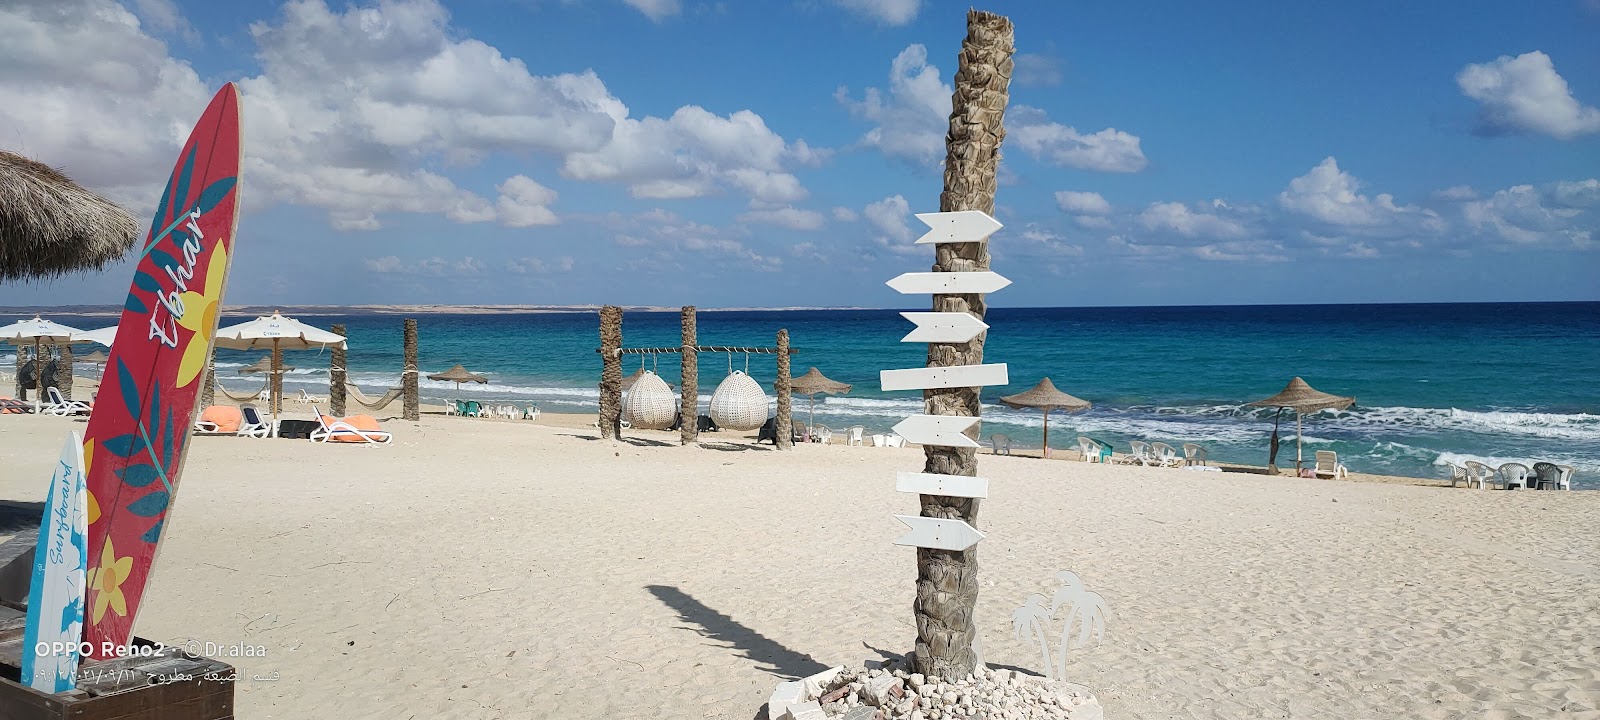 Photo de Al Rawan Resort Beach avec sable lumineux de surface